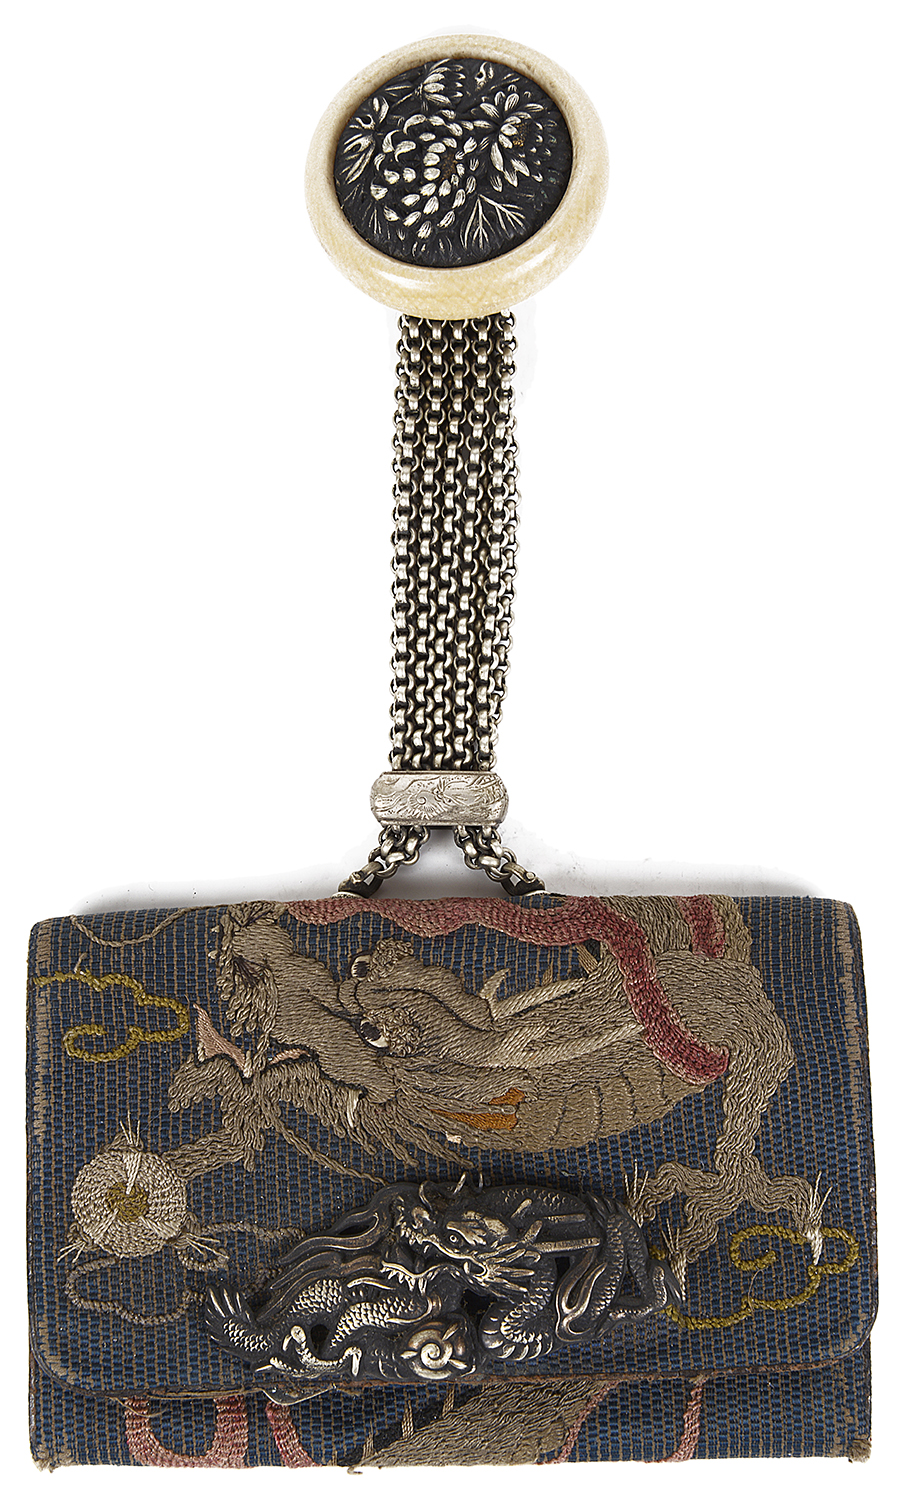 A 19th c. Japanese Meiji period tobacco pouch